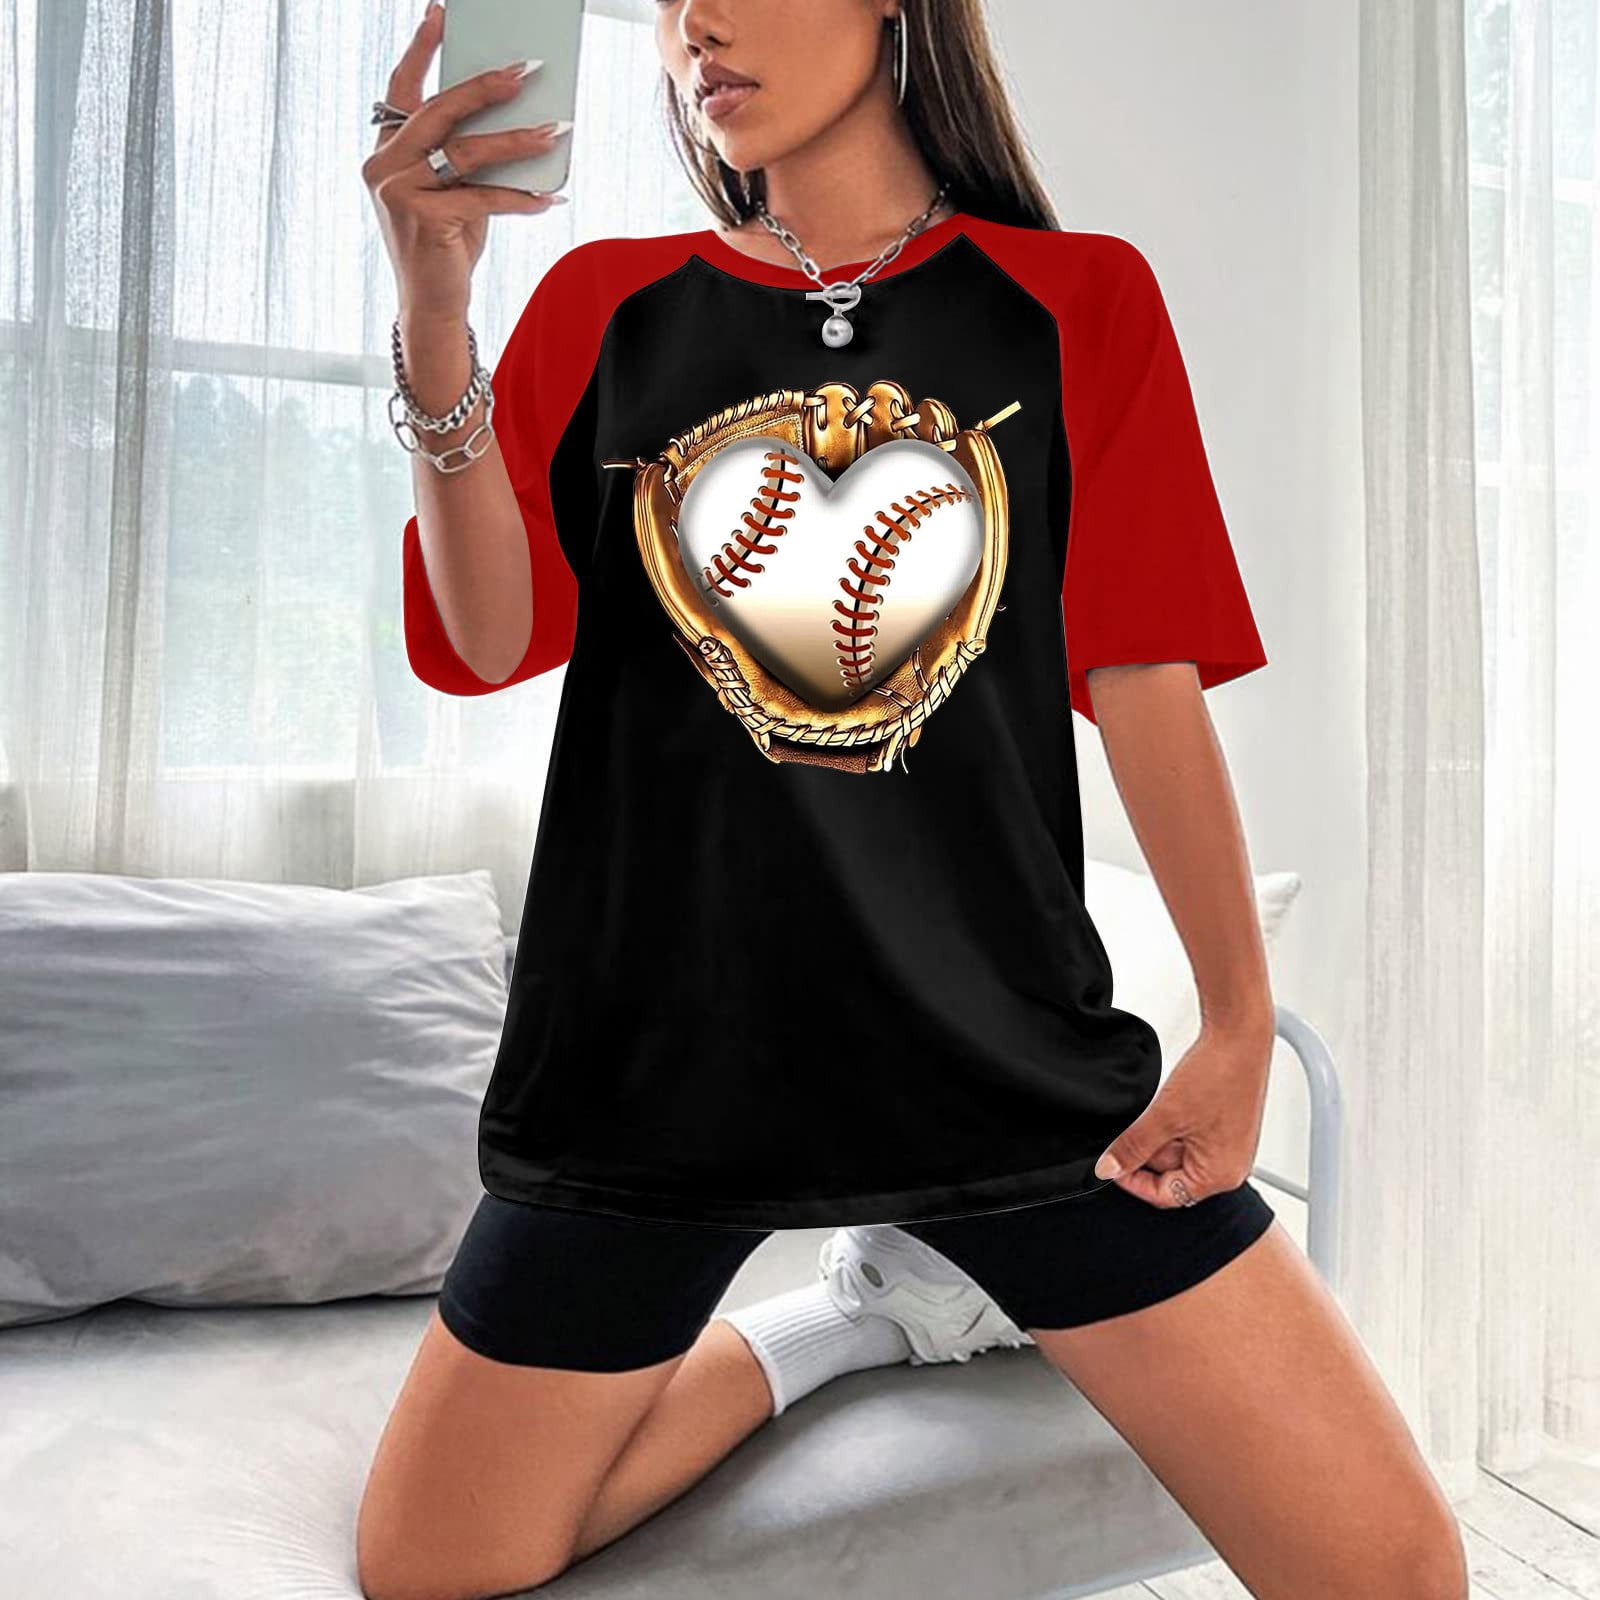 STL Cardinals Baseball Leopard Tee Baseball Tshirts 